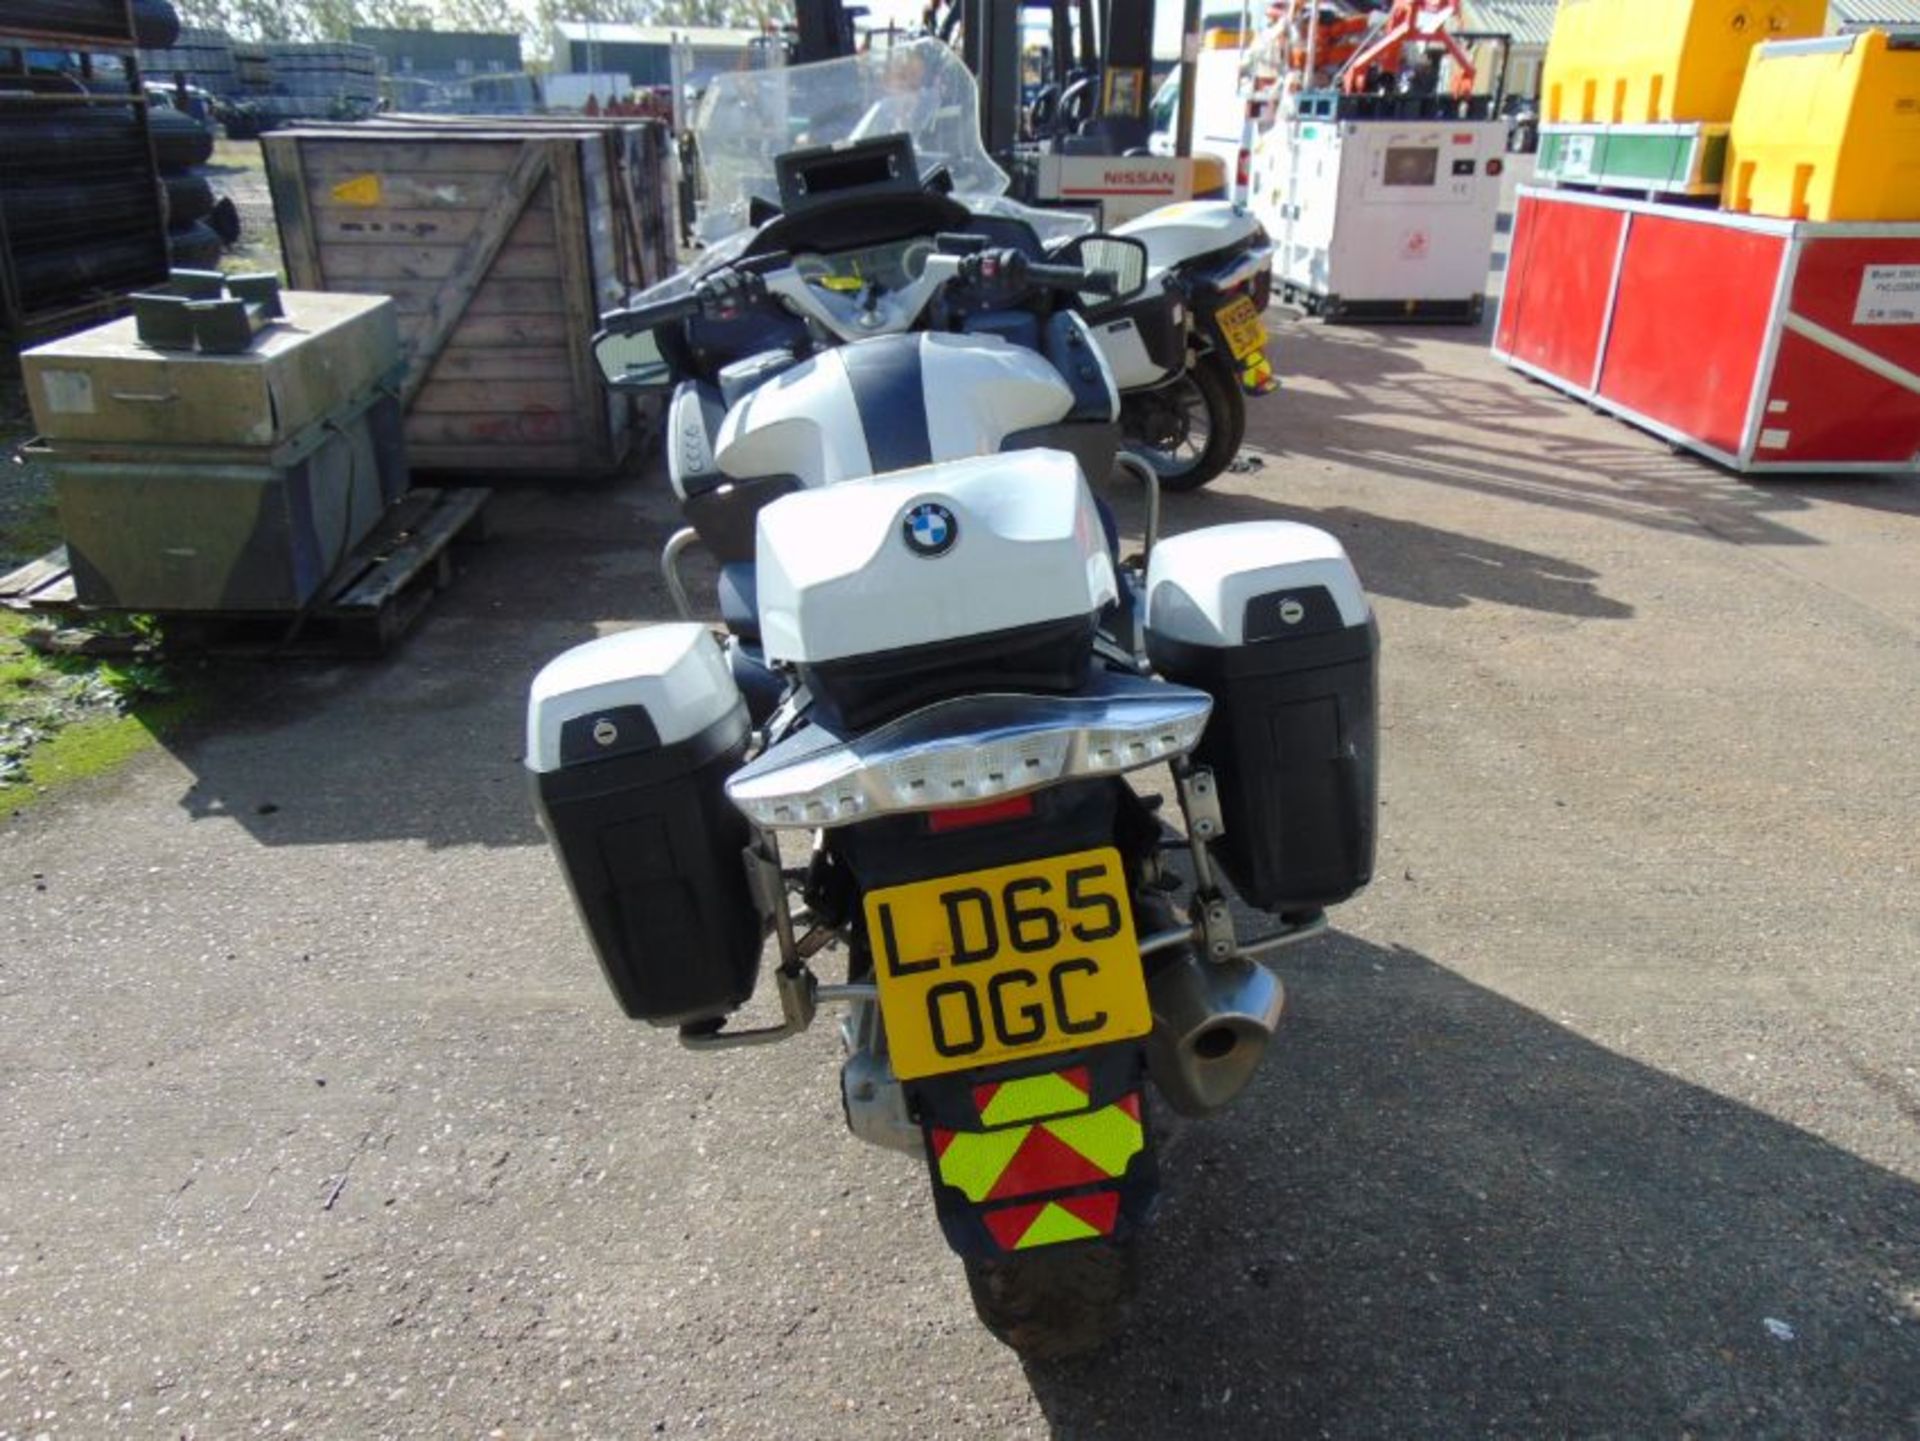 UK Police 2015 BMW R1200RT Motorbike - Image 7 of 19